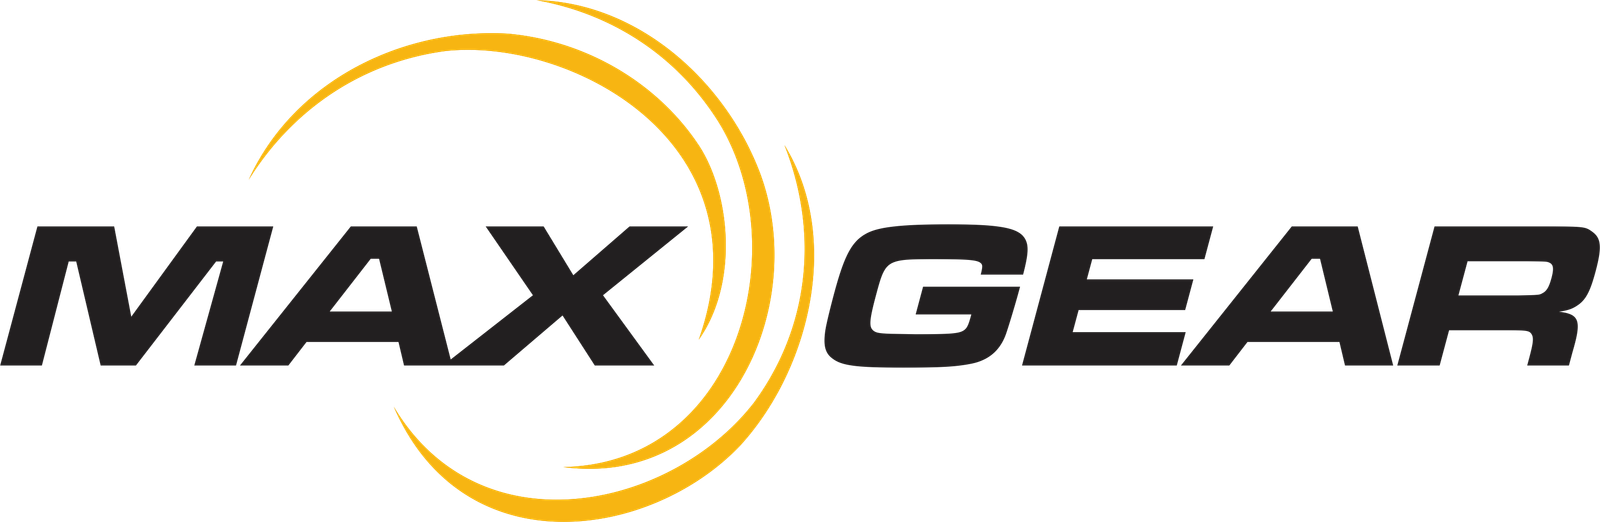 Max Gear logo